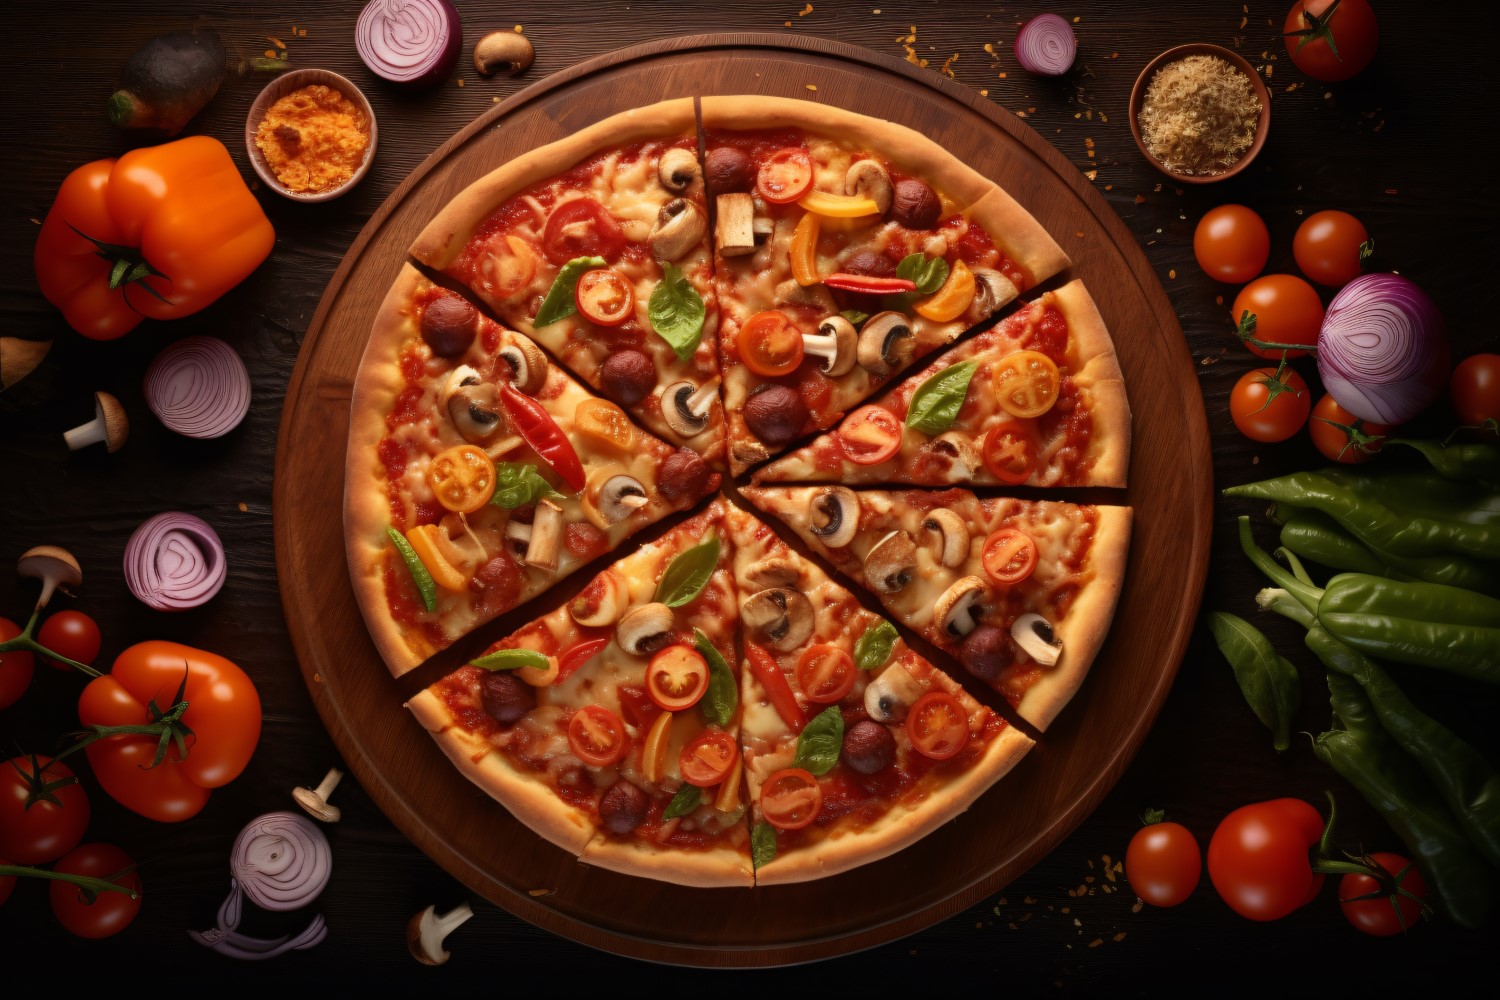 Flatlay Realistic Veggie Pizza 46